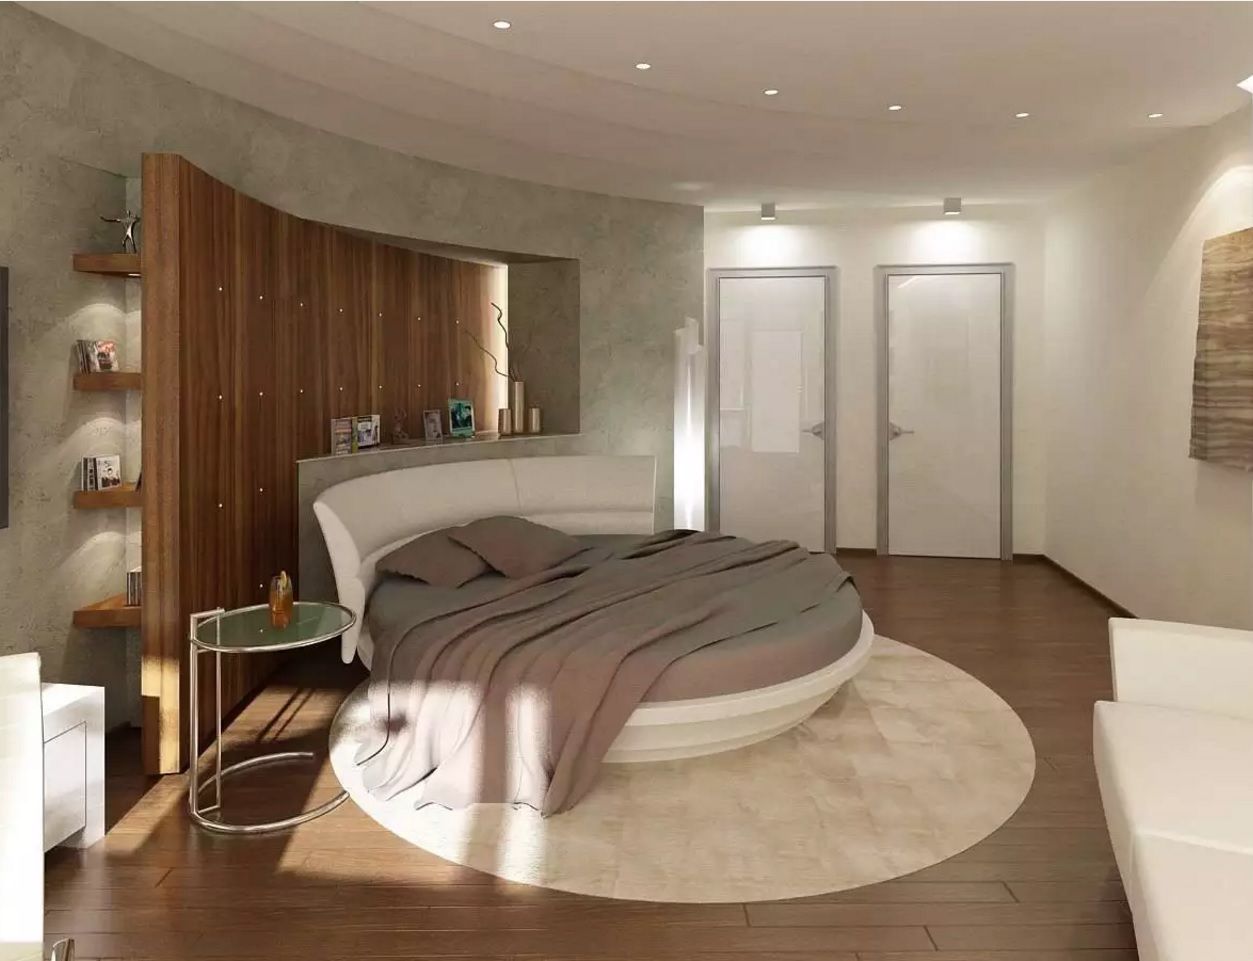 The Circle Bedroom Decor